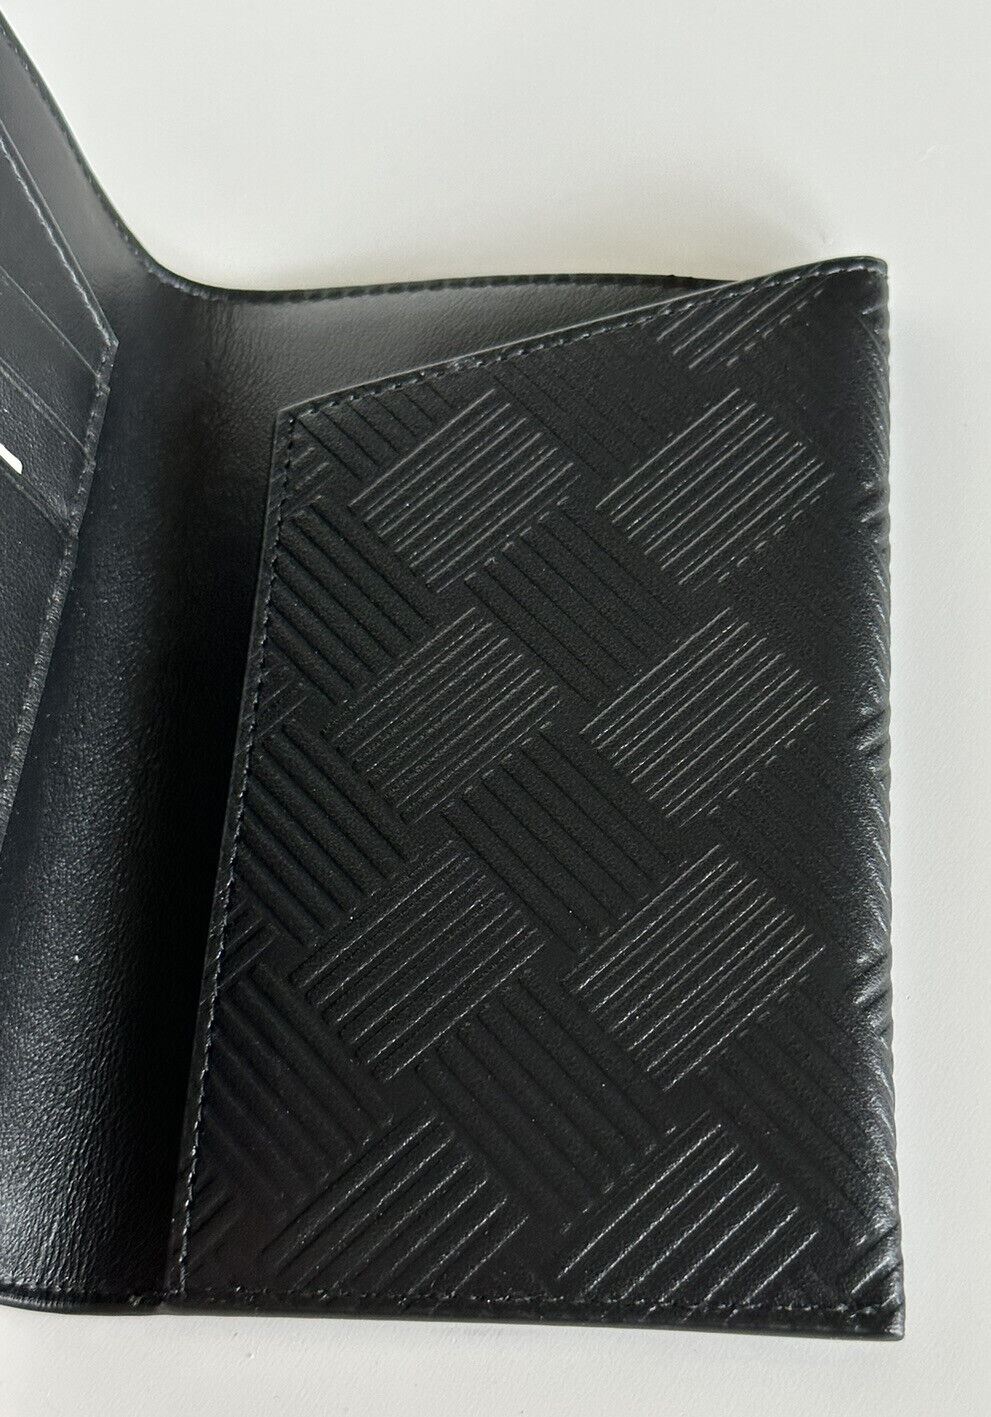 NWT $380 Bottega Veneta Debossed Leather Passport Holder Black/Silver 667061 IT